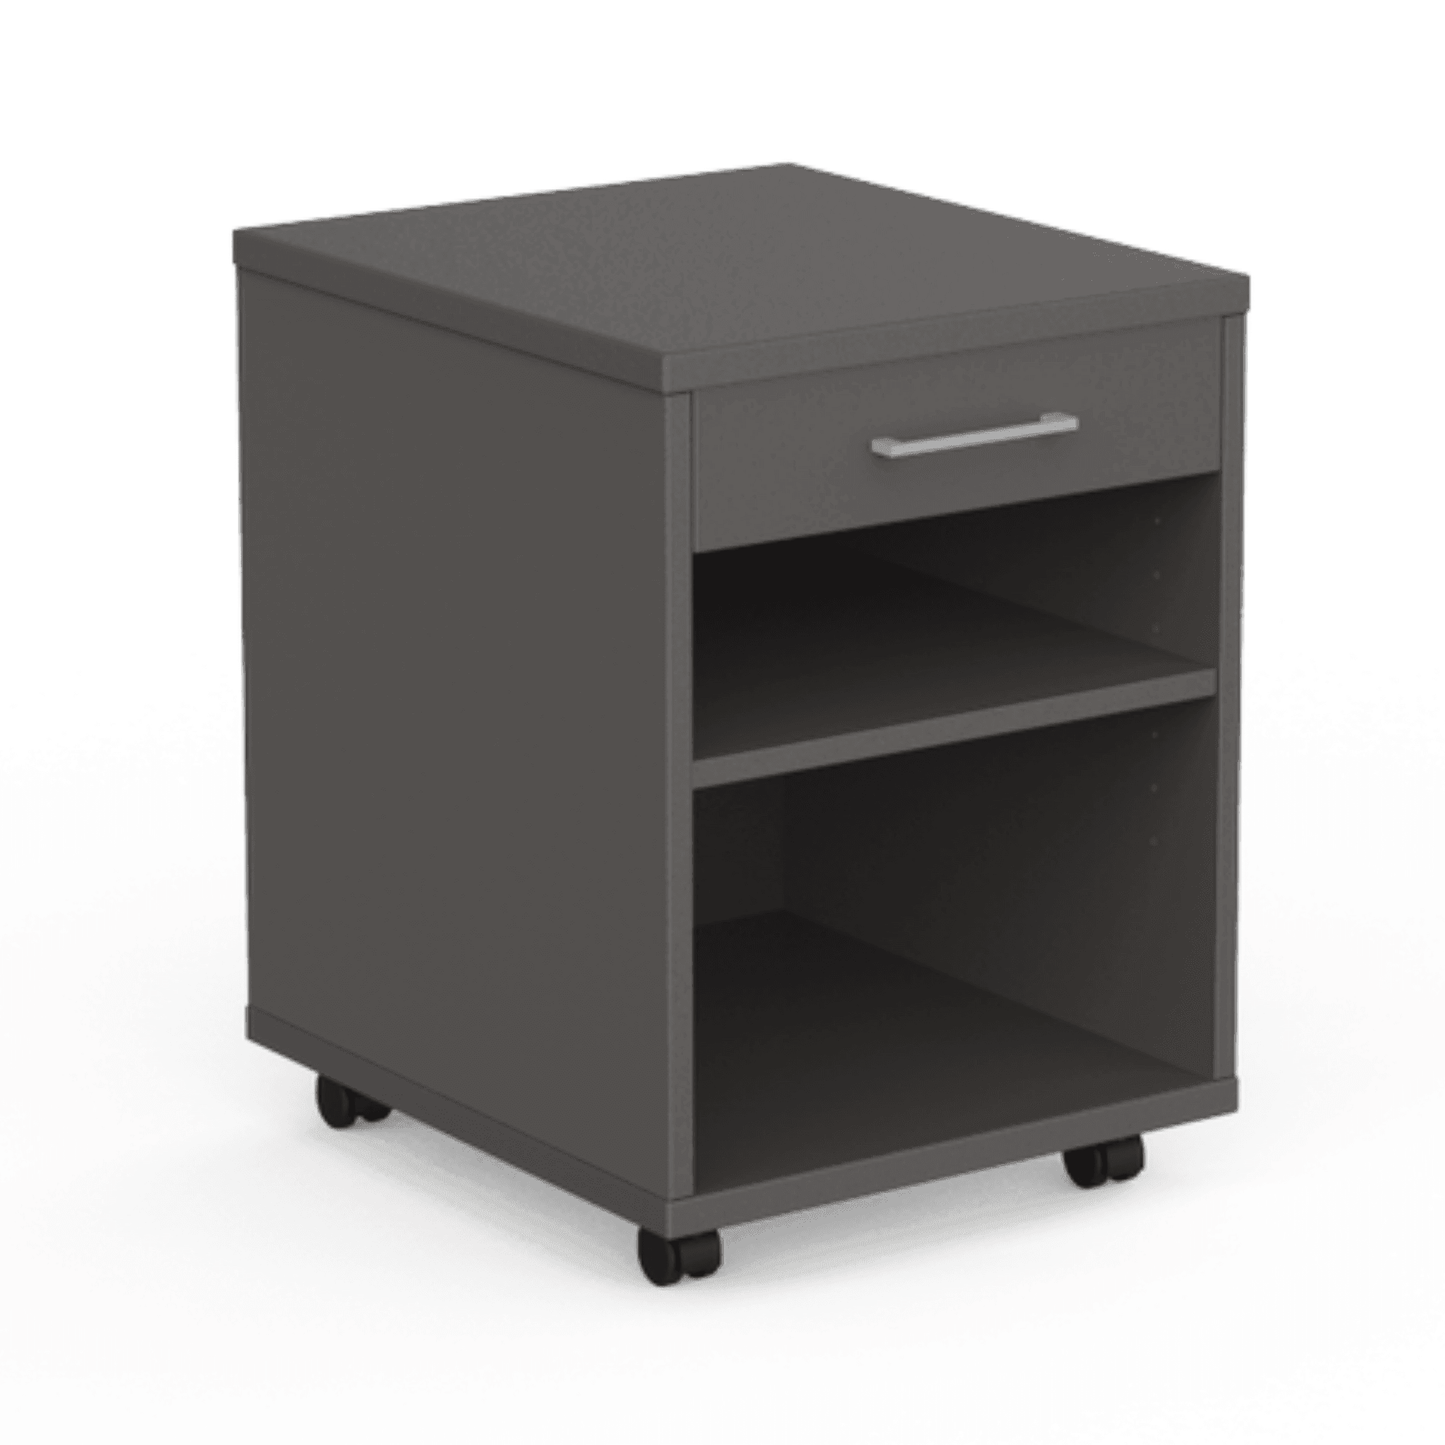 EkoSystem Mobile Book Case Pedestal with EkoSystem Drawer Add-On - Office Furniture Company 